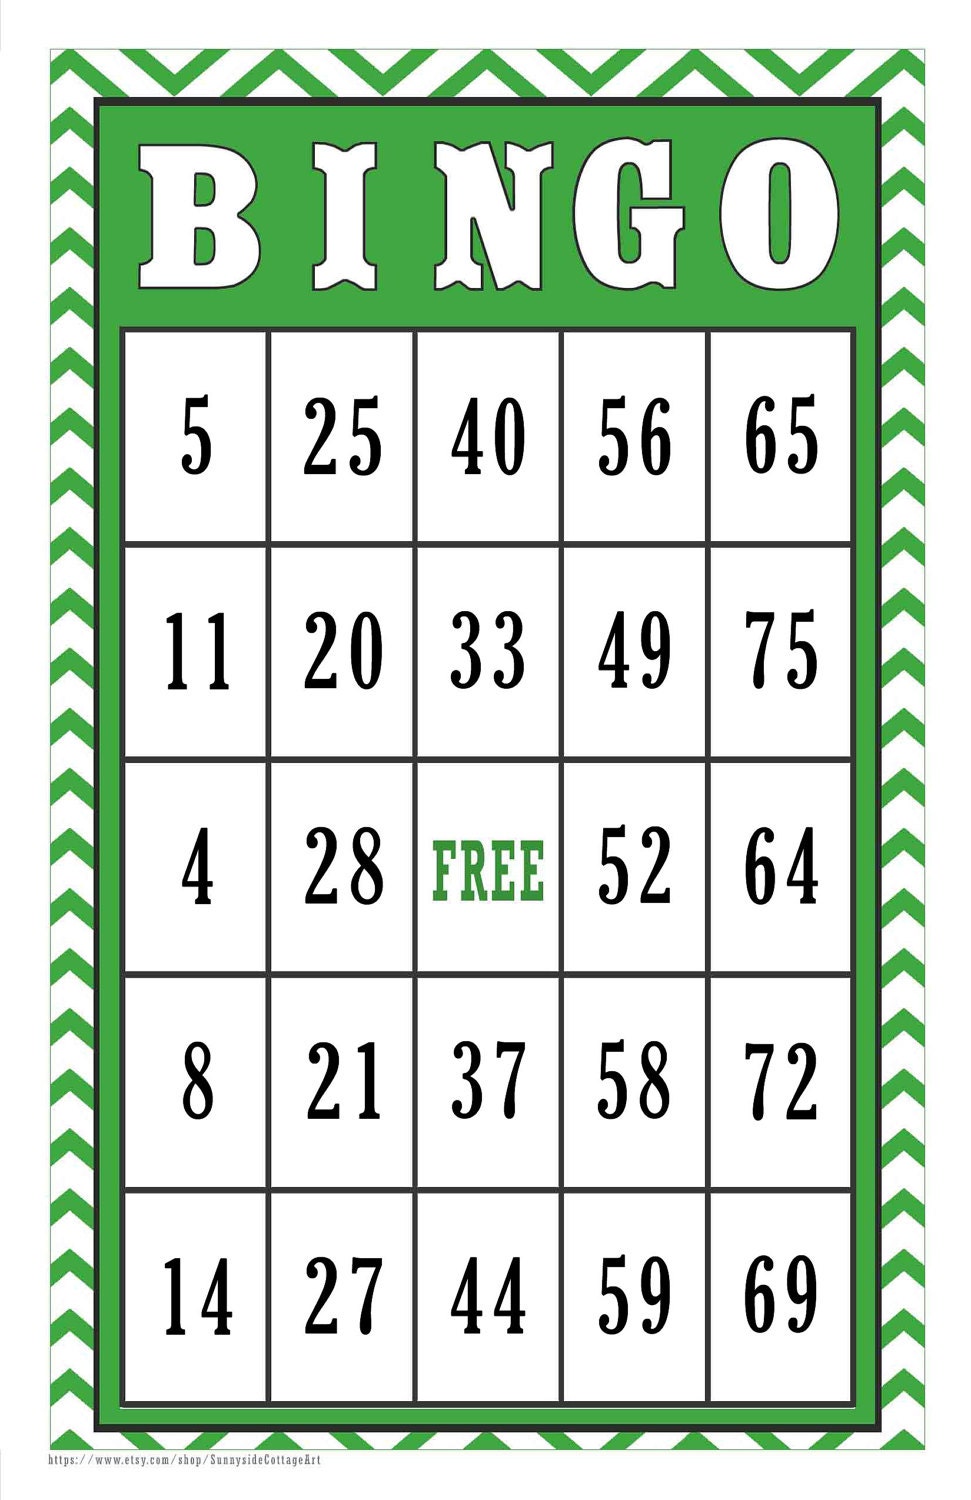 30 card BINGO game St. Patrick's Day bingo by SunnysideCottageArt